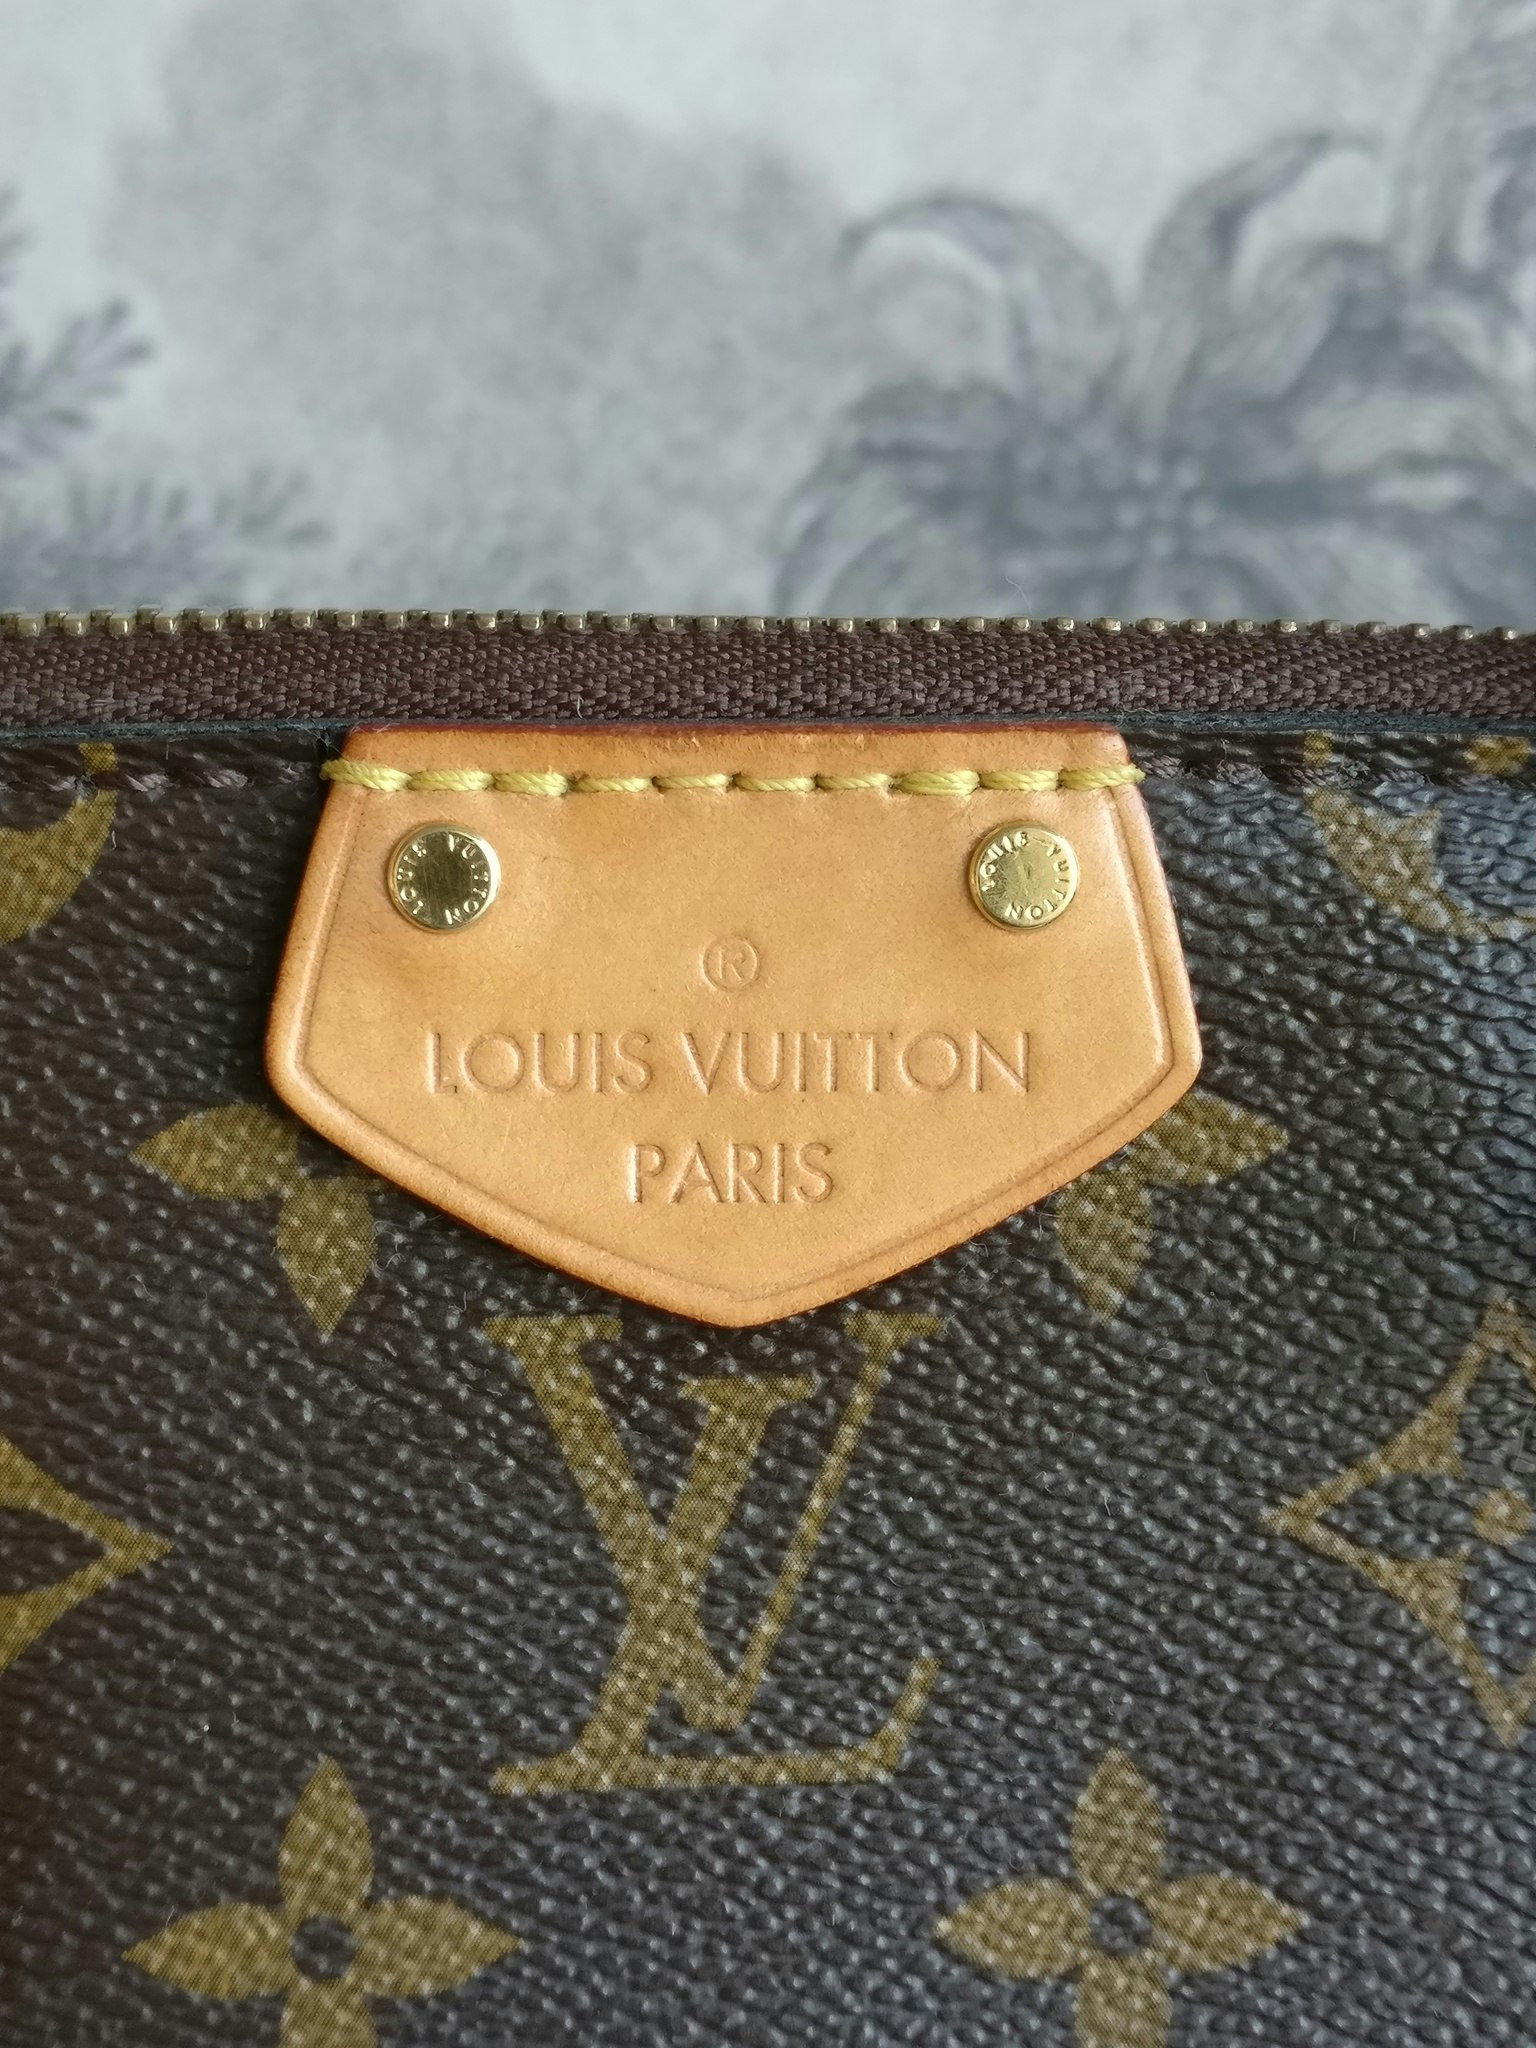 Louis Vuitton Turenne PM – Pursekelly – high quality designer